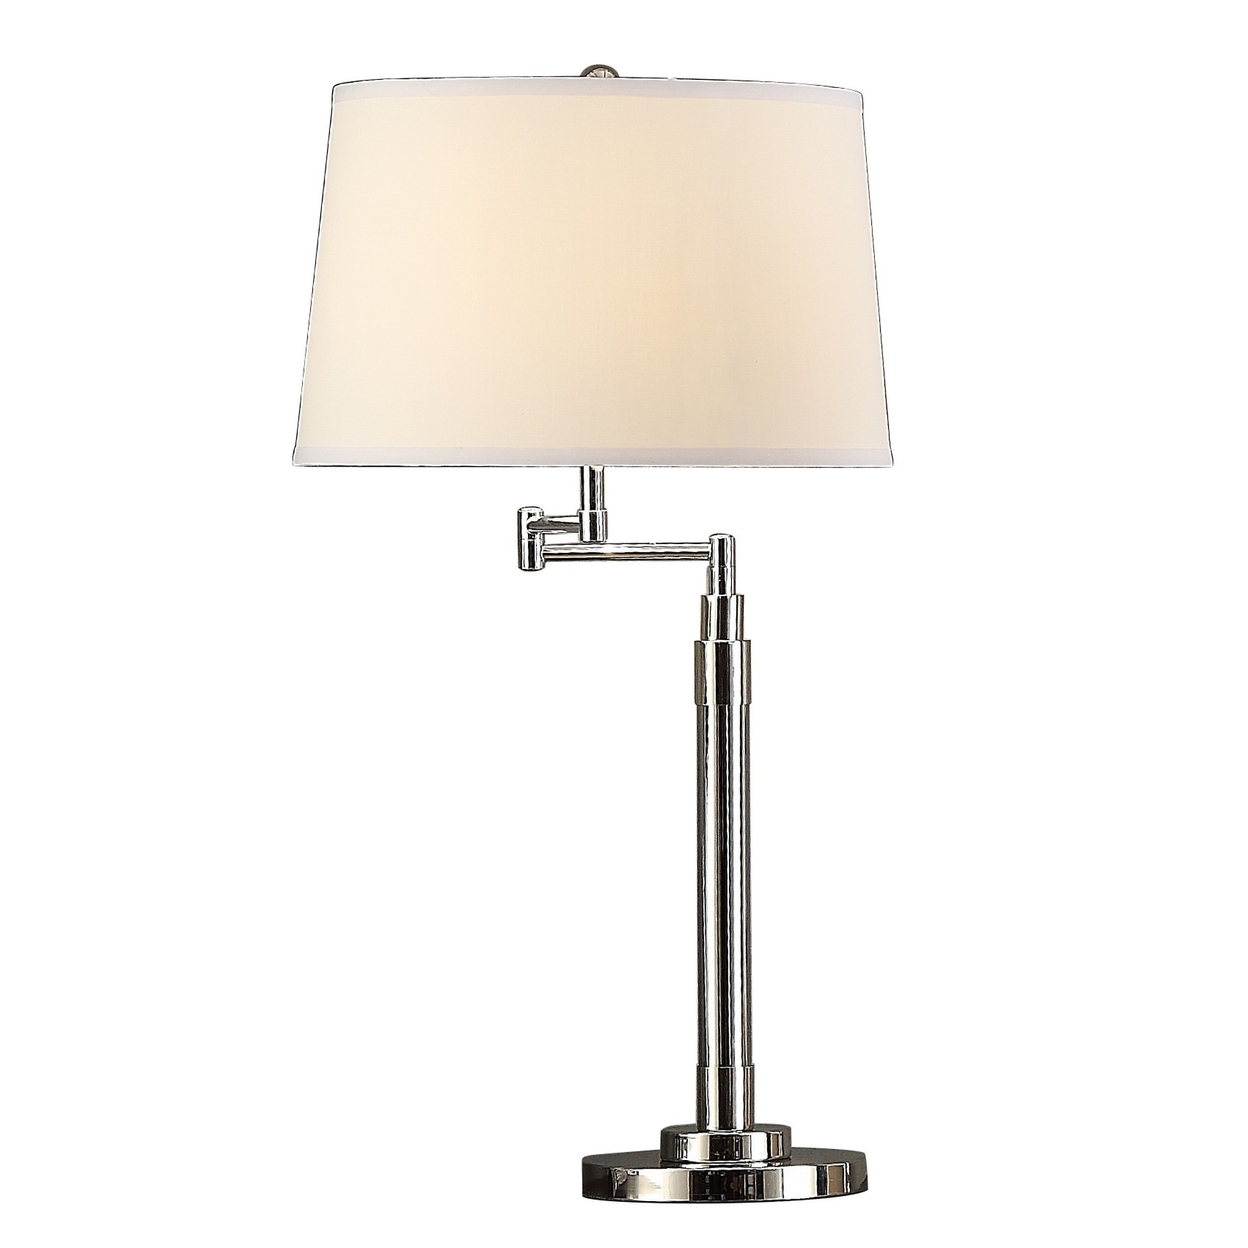 31 Inch Table Lamp Set Of 2, Empire Fabric Shade, Modern Nickel Base -Saltoro Sherpi